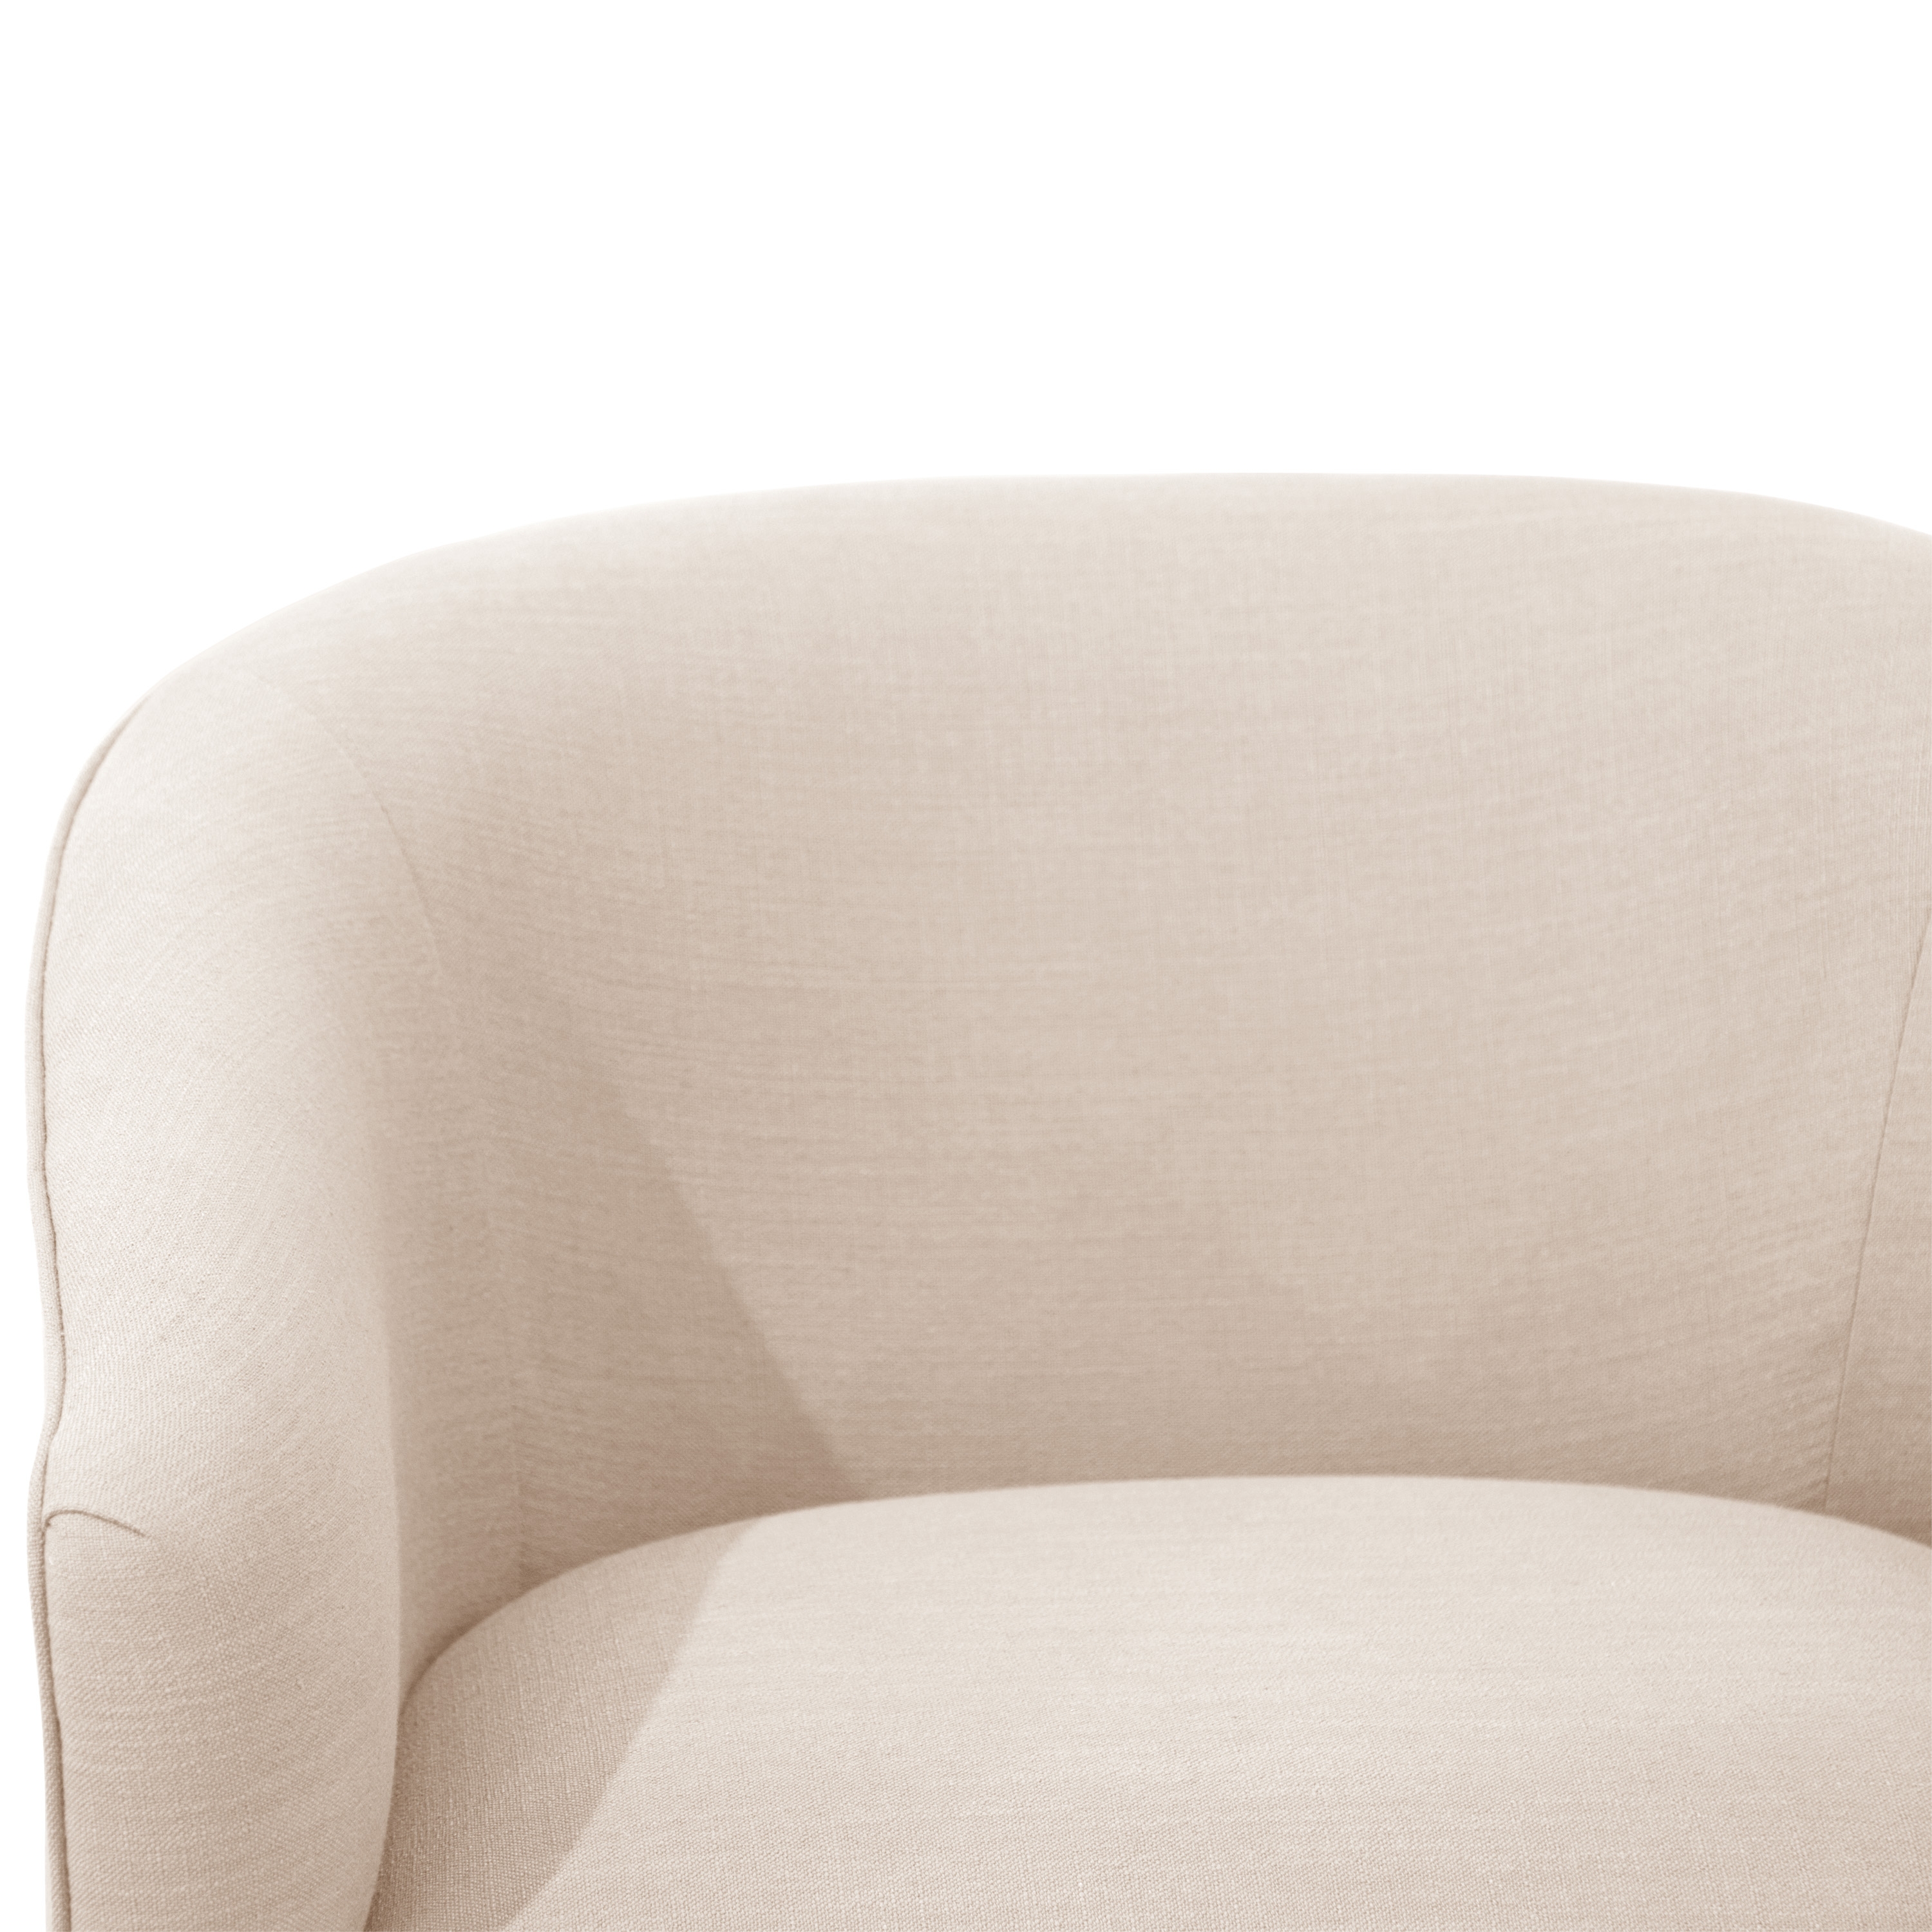 Dexter Chair, Talc - Image 4